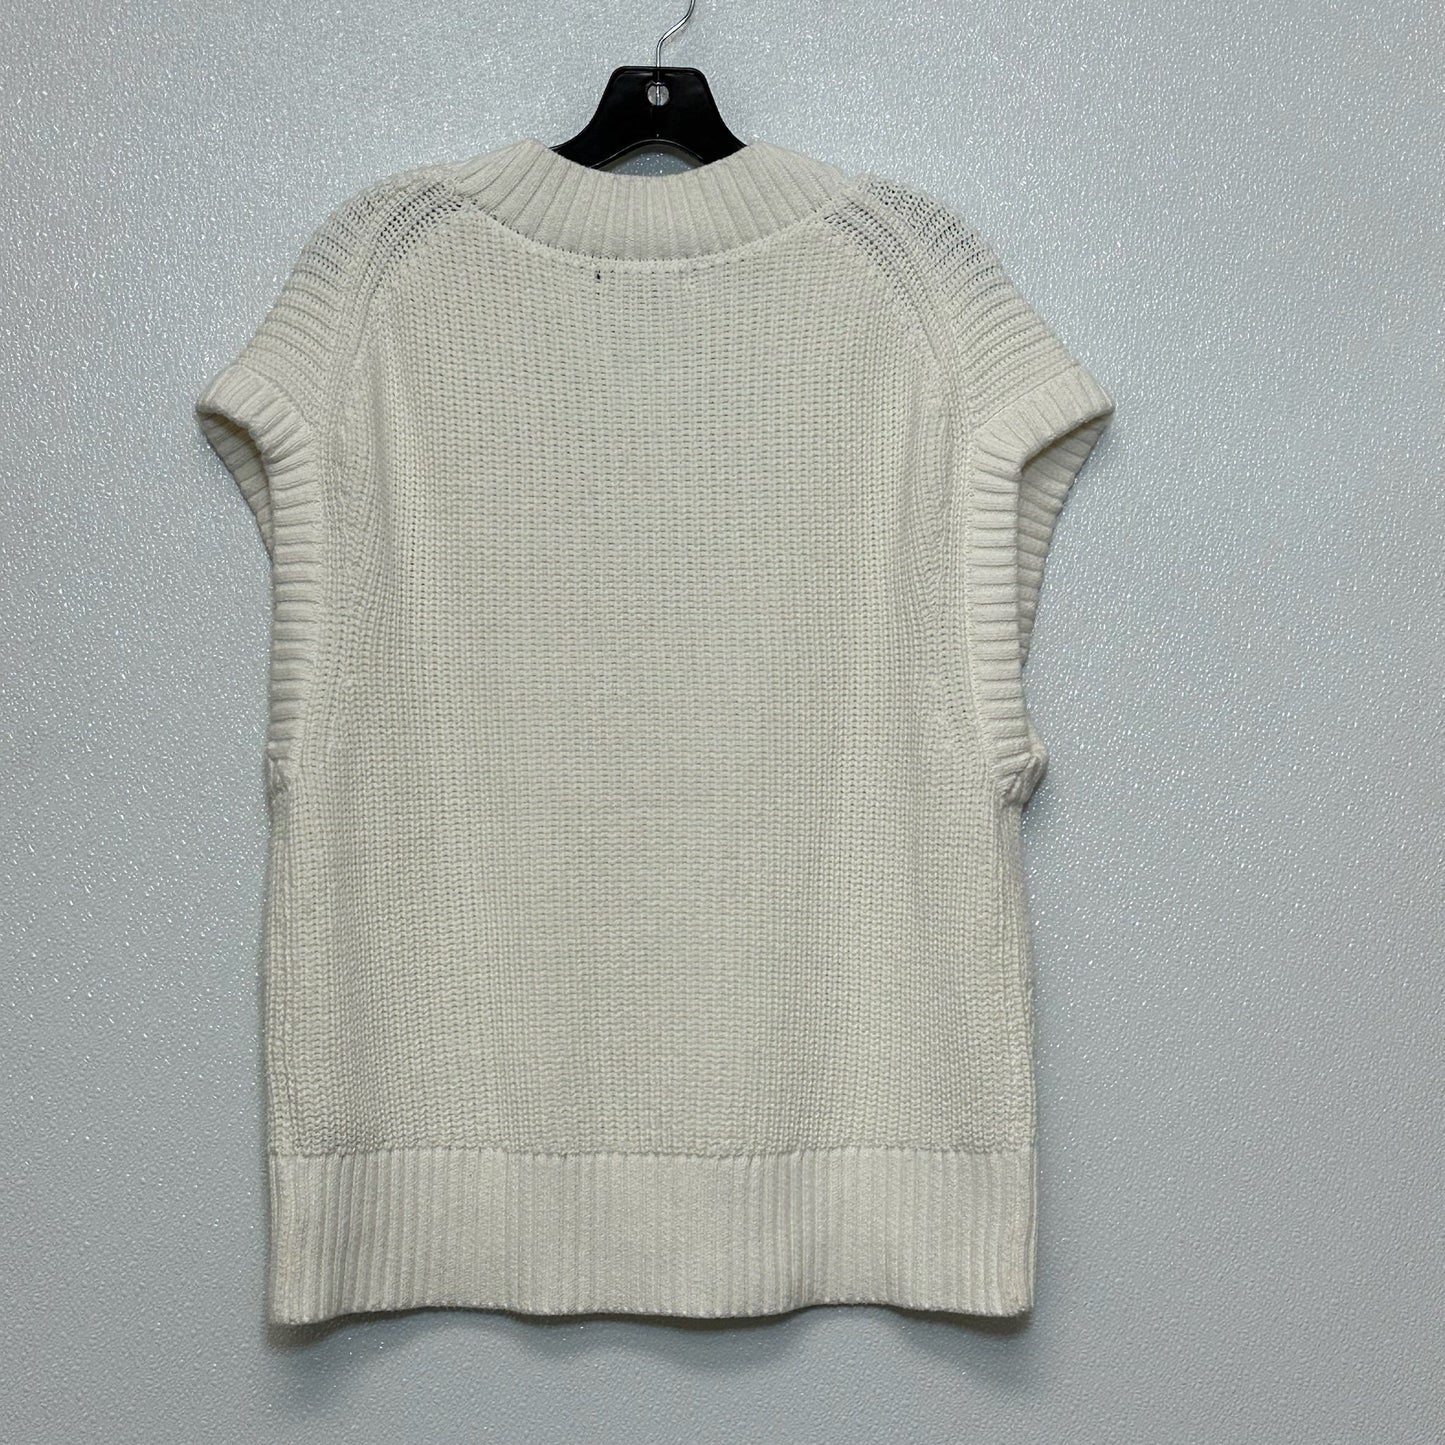 Vest Sweater By Banana Republic O  Size: Xs